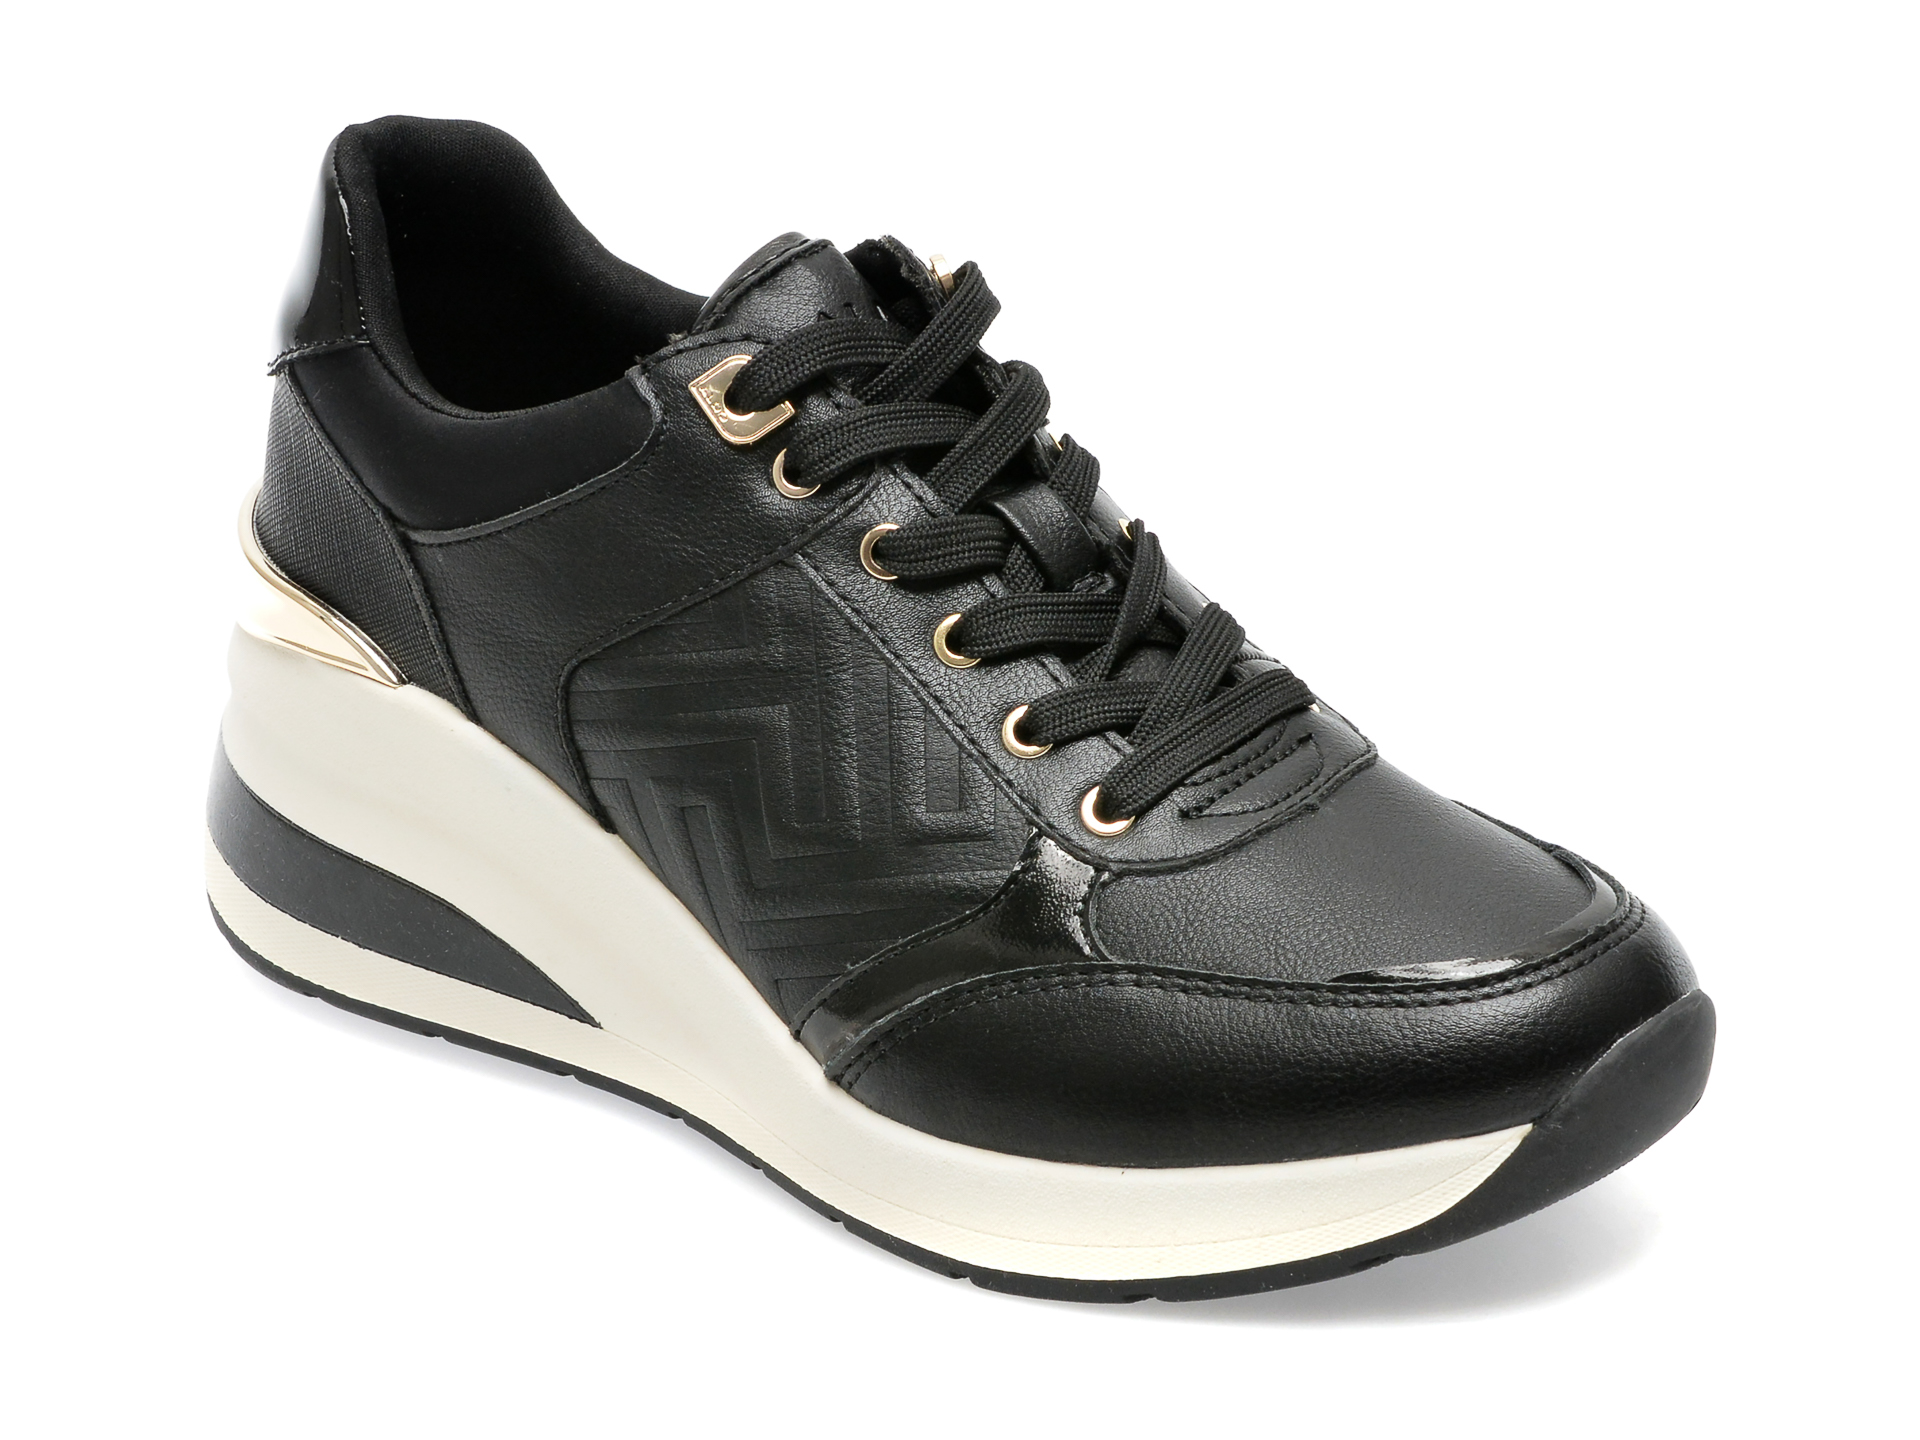 Poze Pantofi ALDO negri, ICONISTEP004, din piele ecologica otter.ro